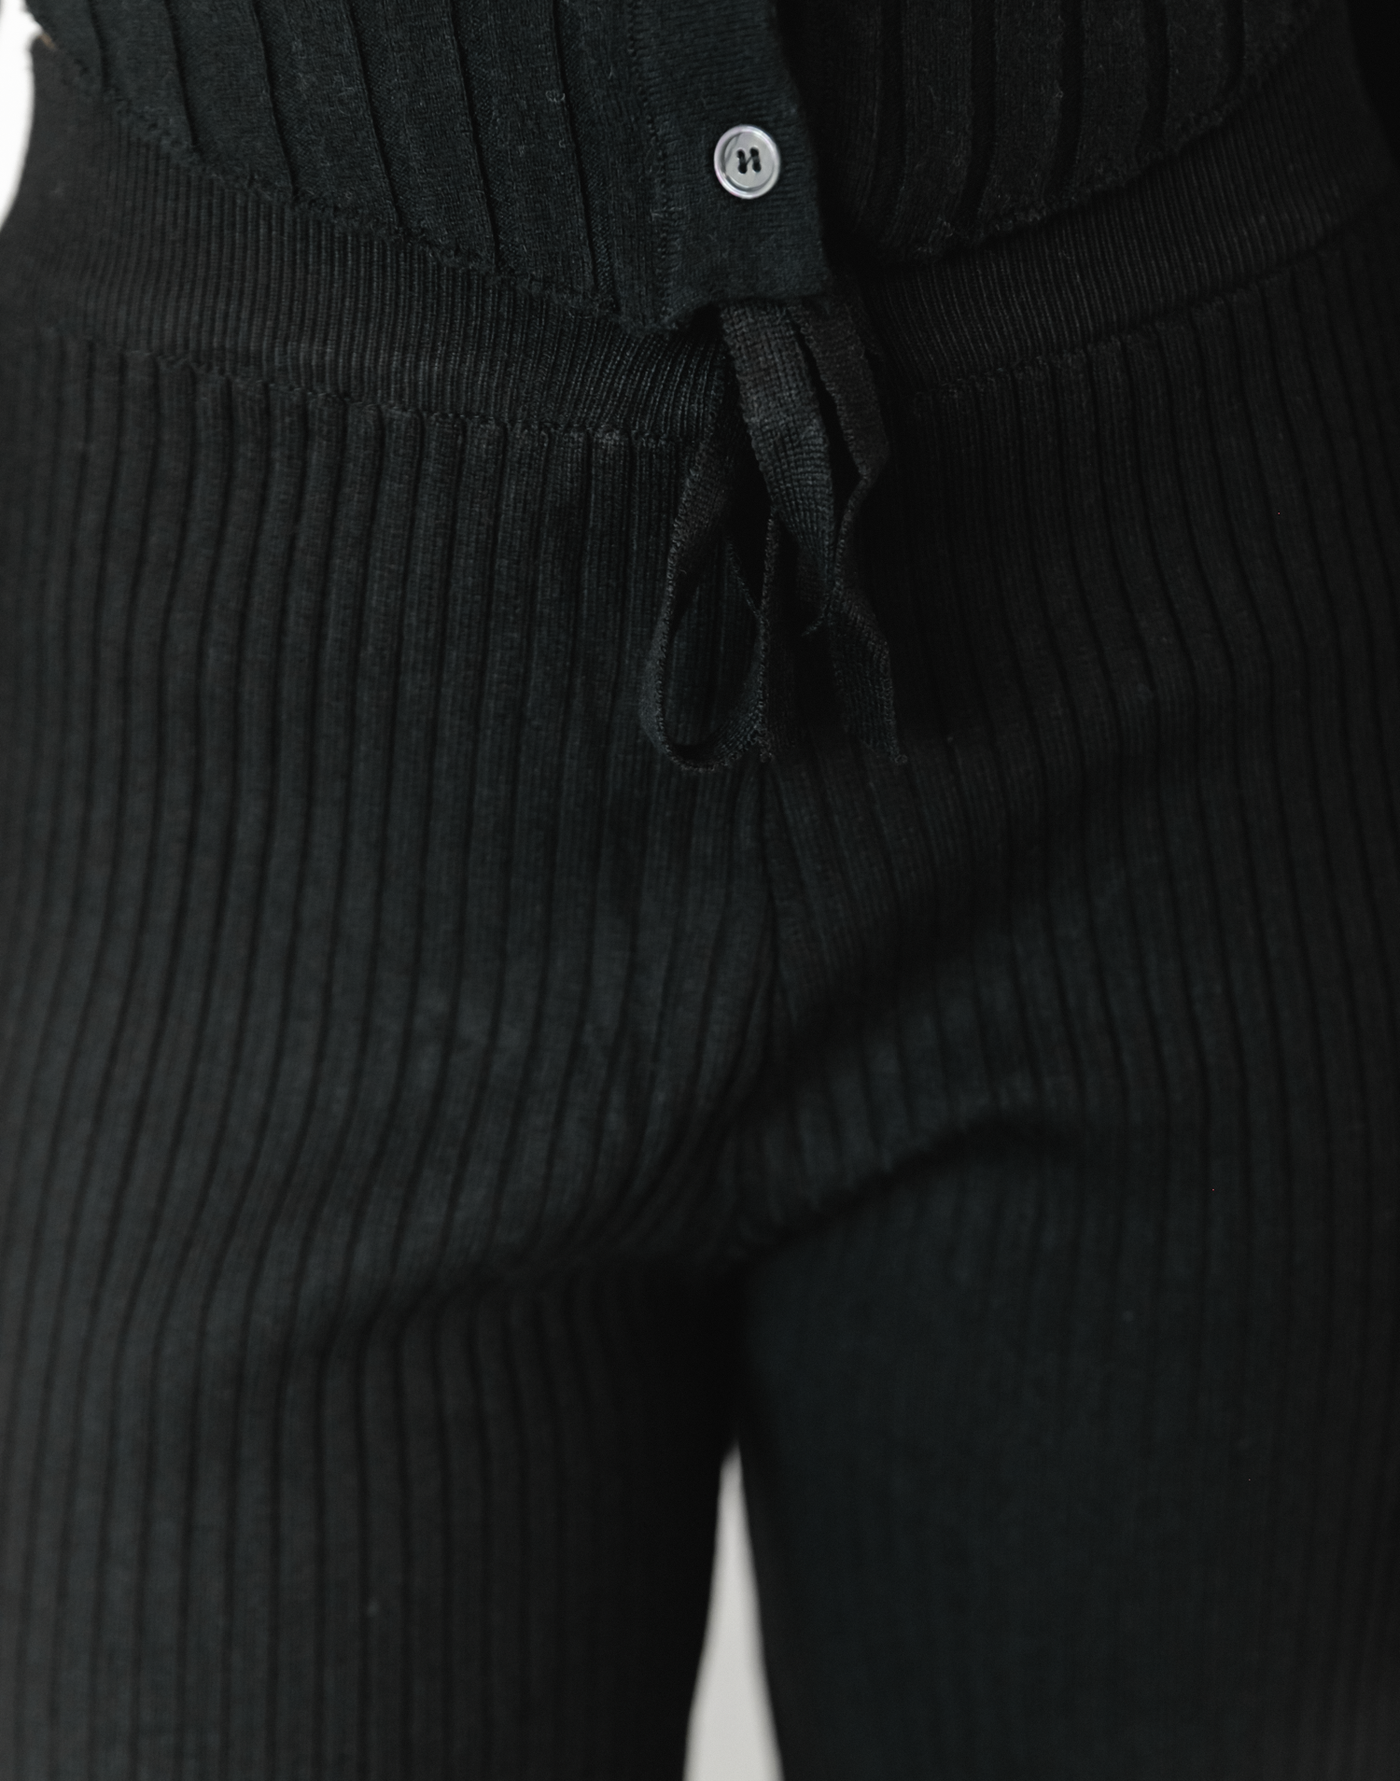 Maloney Pants (Black) -Black Wide Leg Pants - Women's Pants - Charcoal Clothing